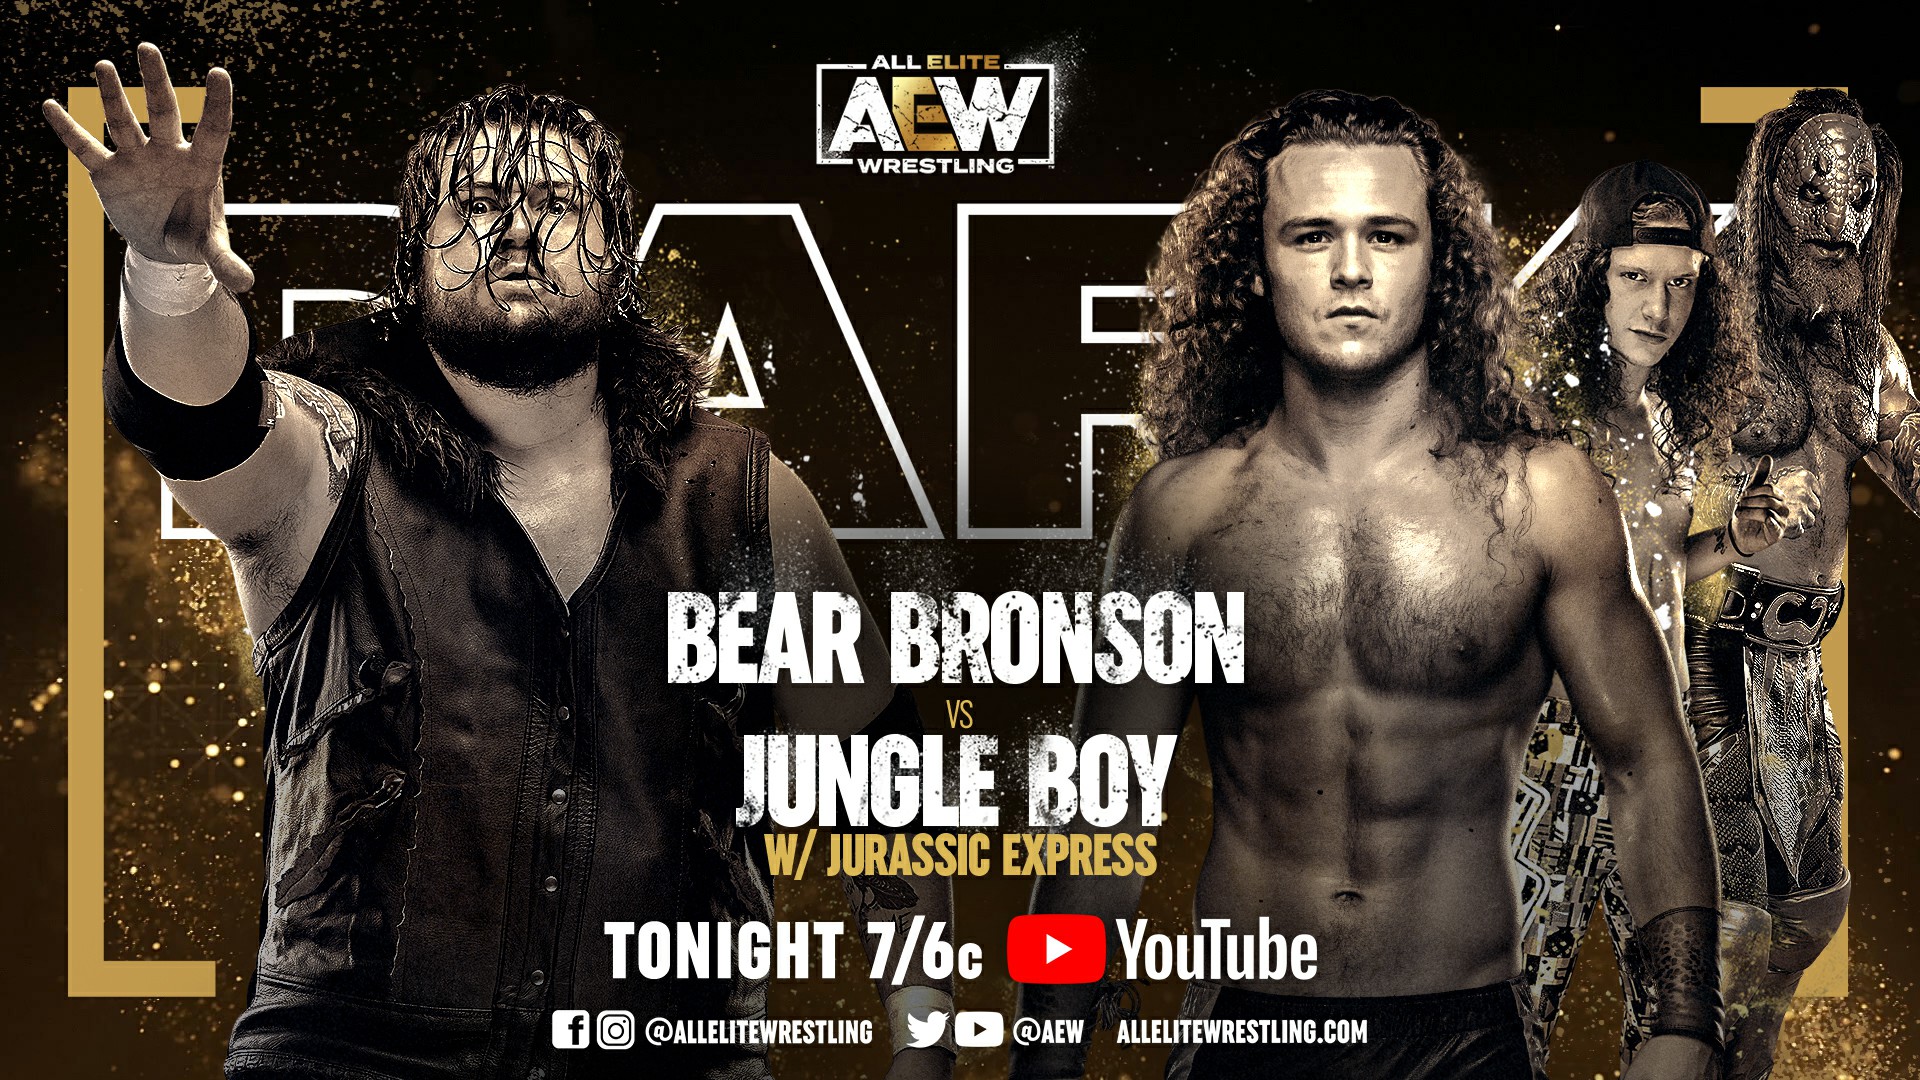 Wwe на русском языке 545. AEW Wrestling. Bear Bronson. Jungle boy AEW. Рестлинг на русском языке WWE 2022.